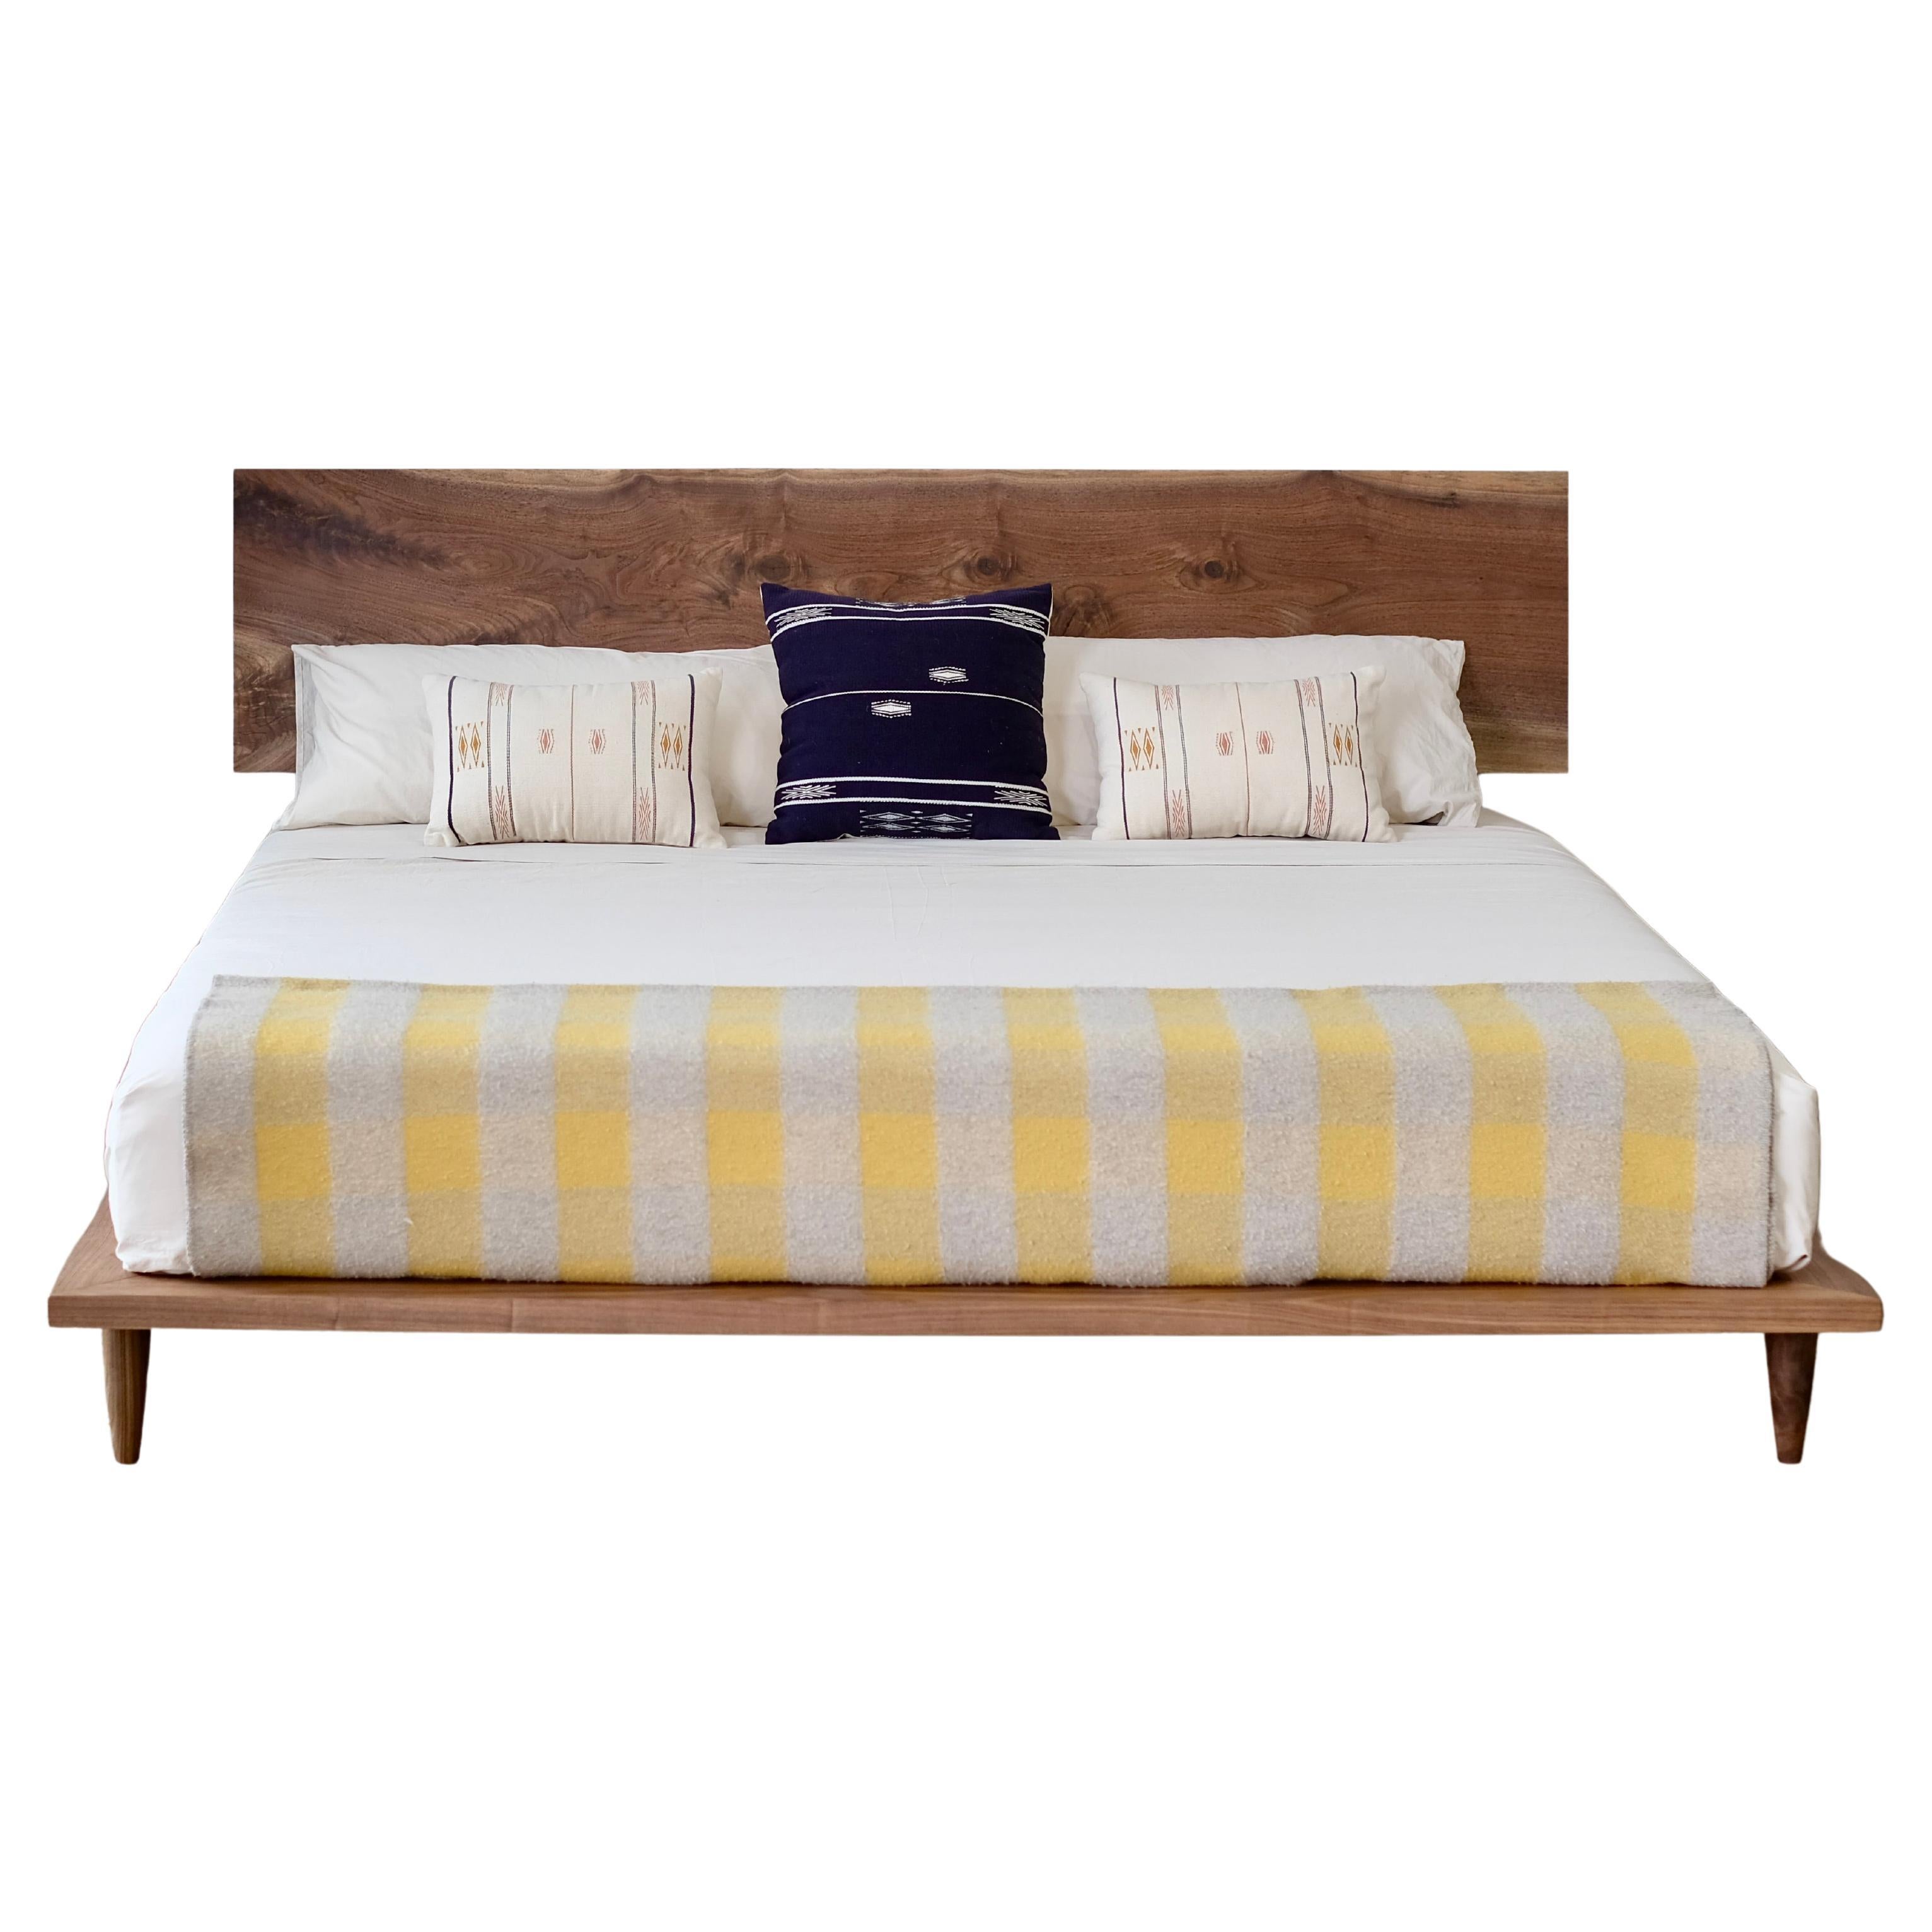 Mid Century Modern Platform Bed With Solid Wood Headboard in Walnut